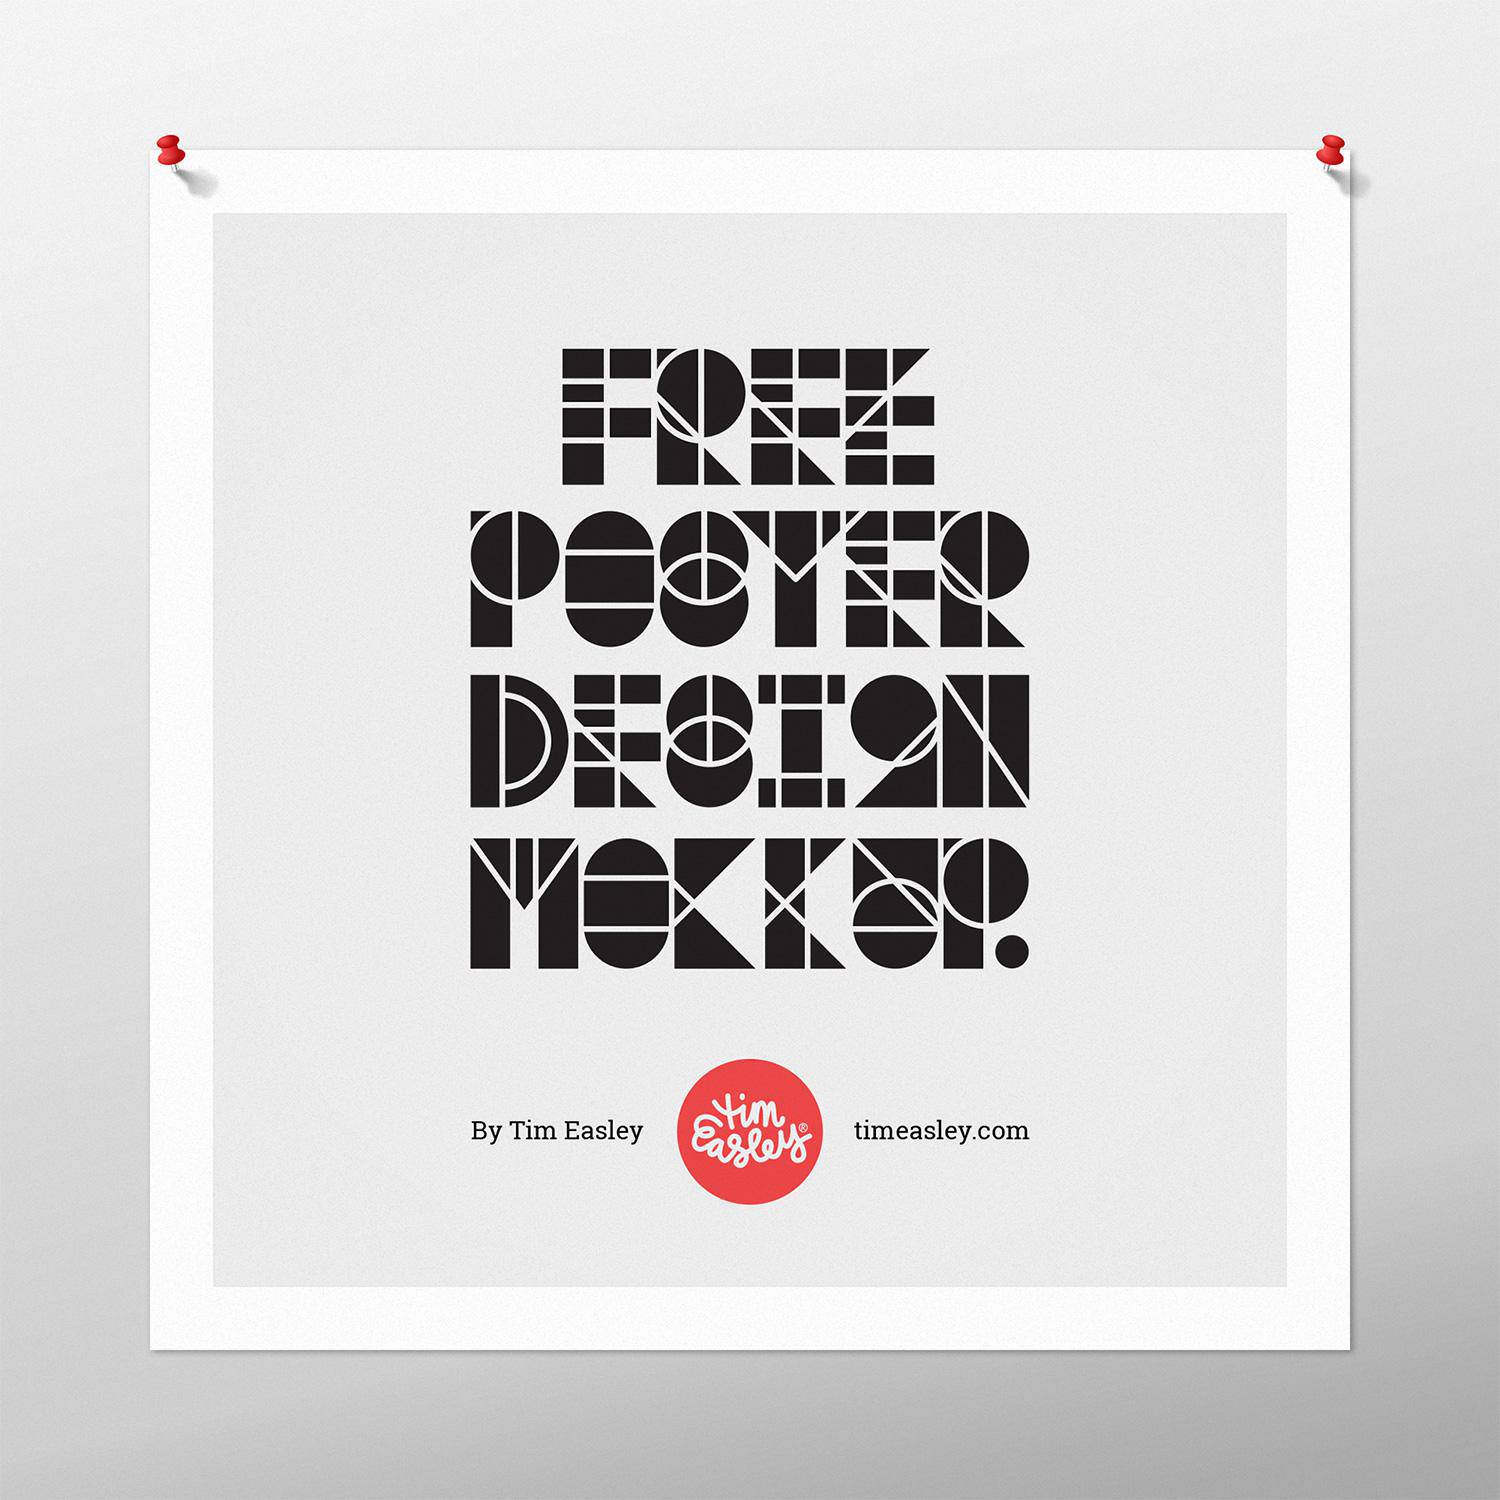 Free-Poster-Design-Mockup-4